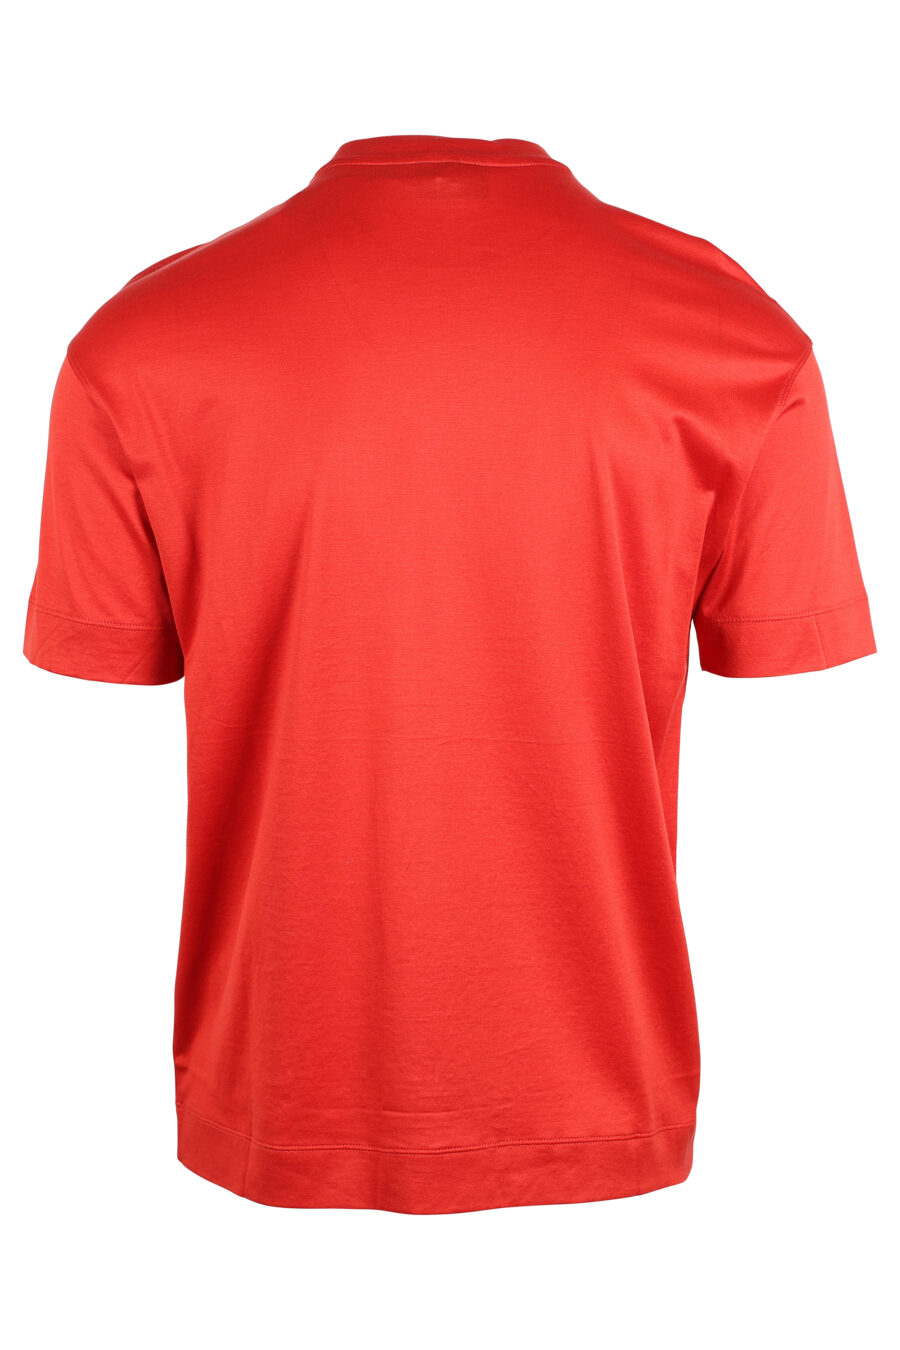 Rotes T-Shirt mit einfarbigem Maxilogo - IMG 4746